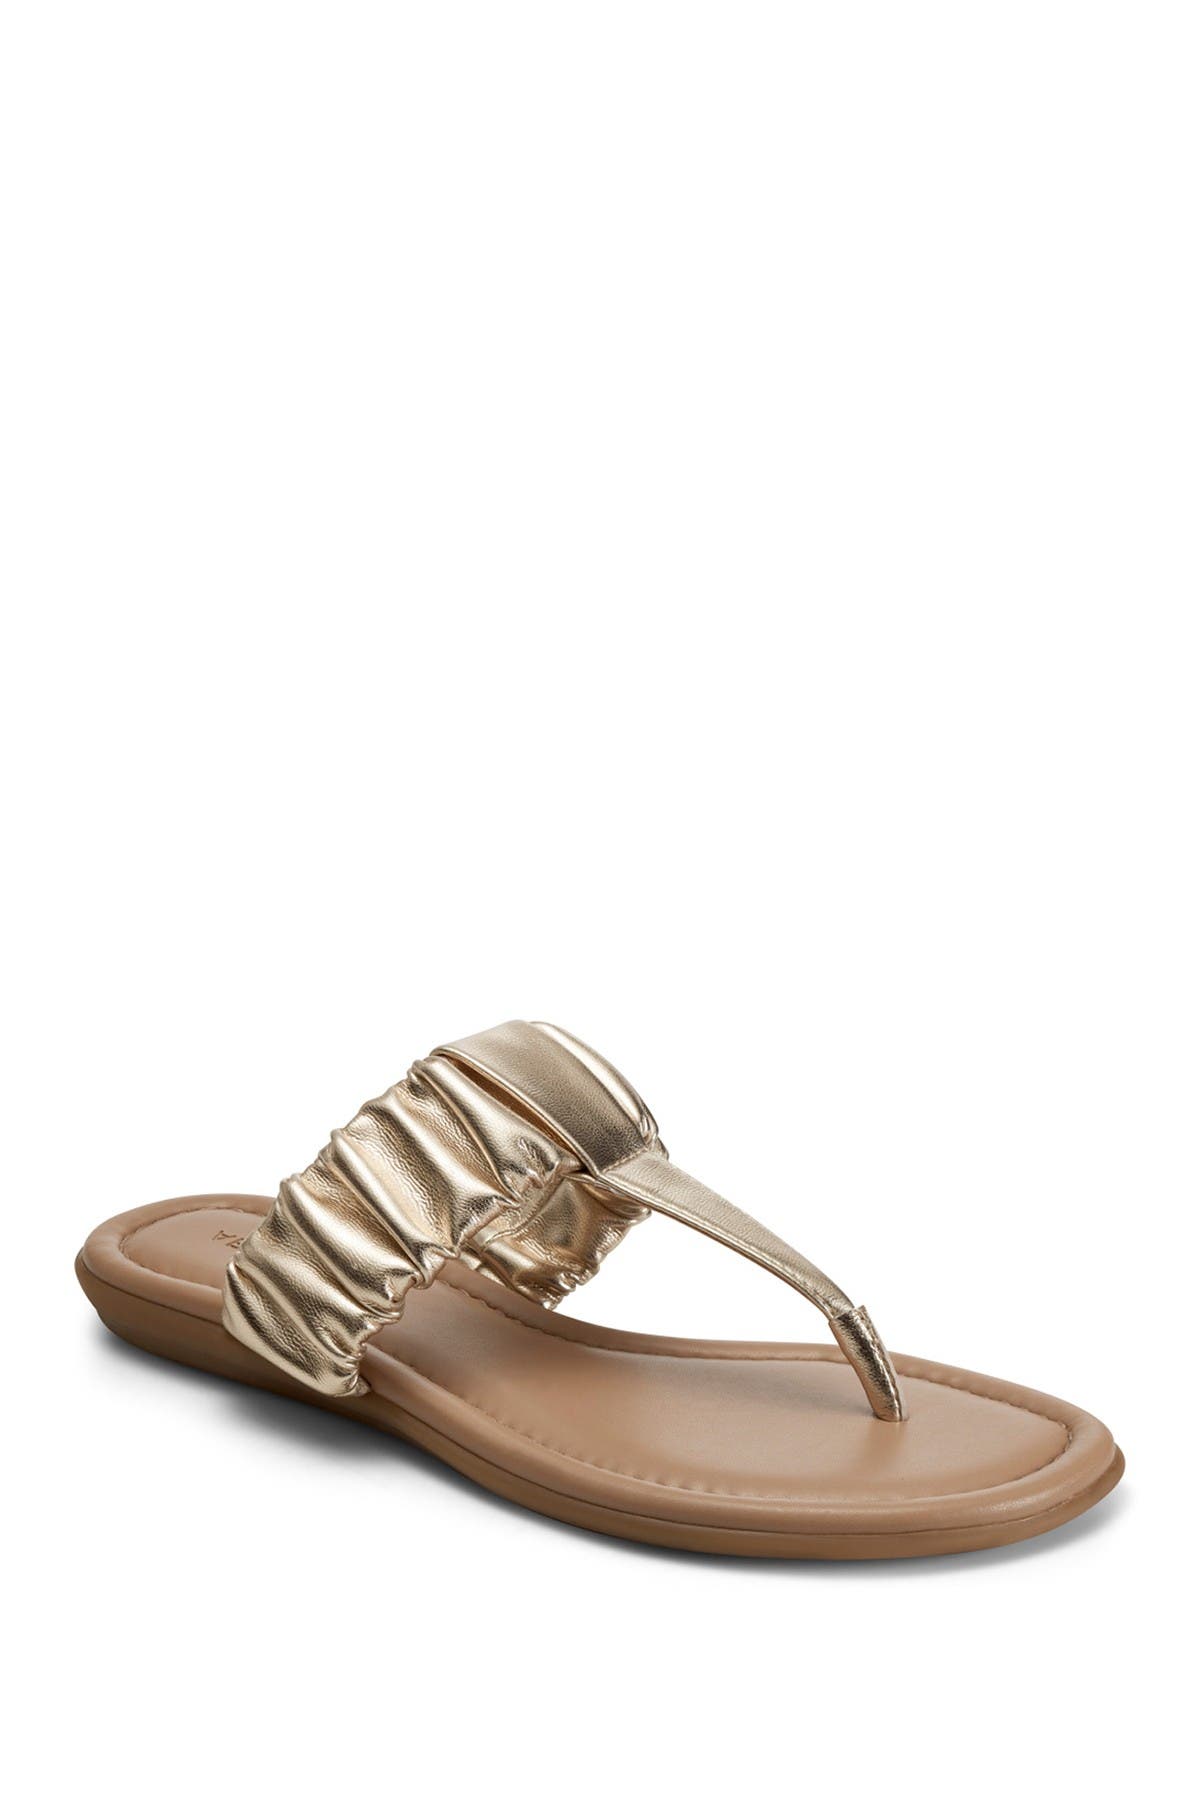 Aerosoles Cady T-strap Sandal In Soft Gold Pu